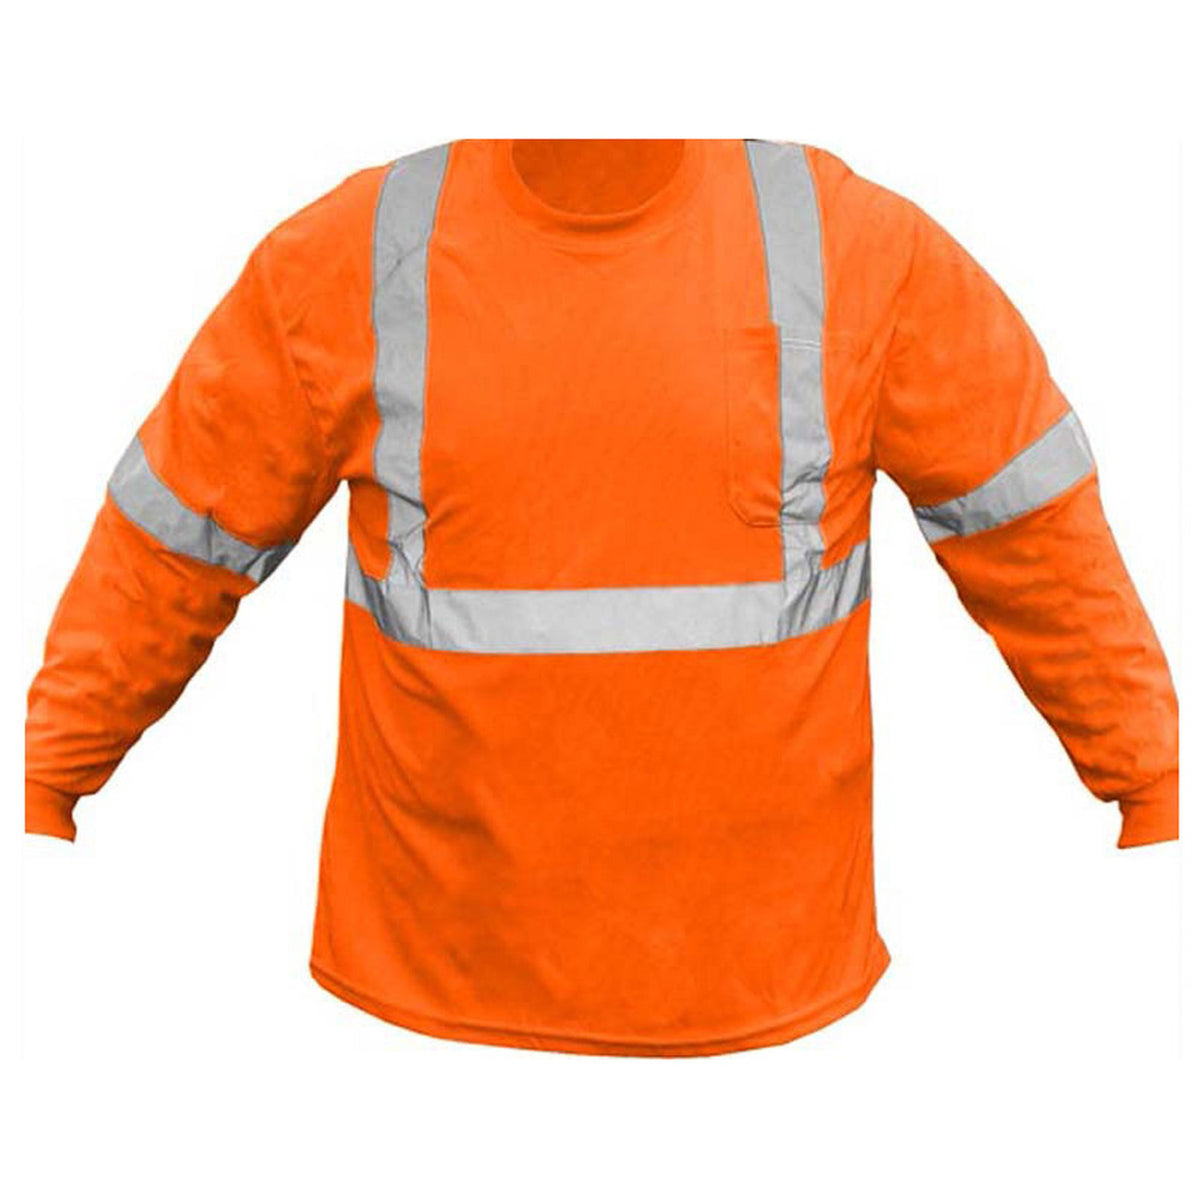 Forester Hi-Vis Orange Class 2 Long Sleeve Safety T-Shirt